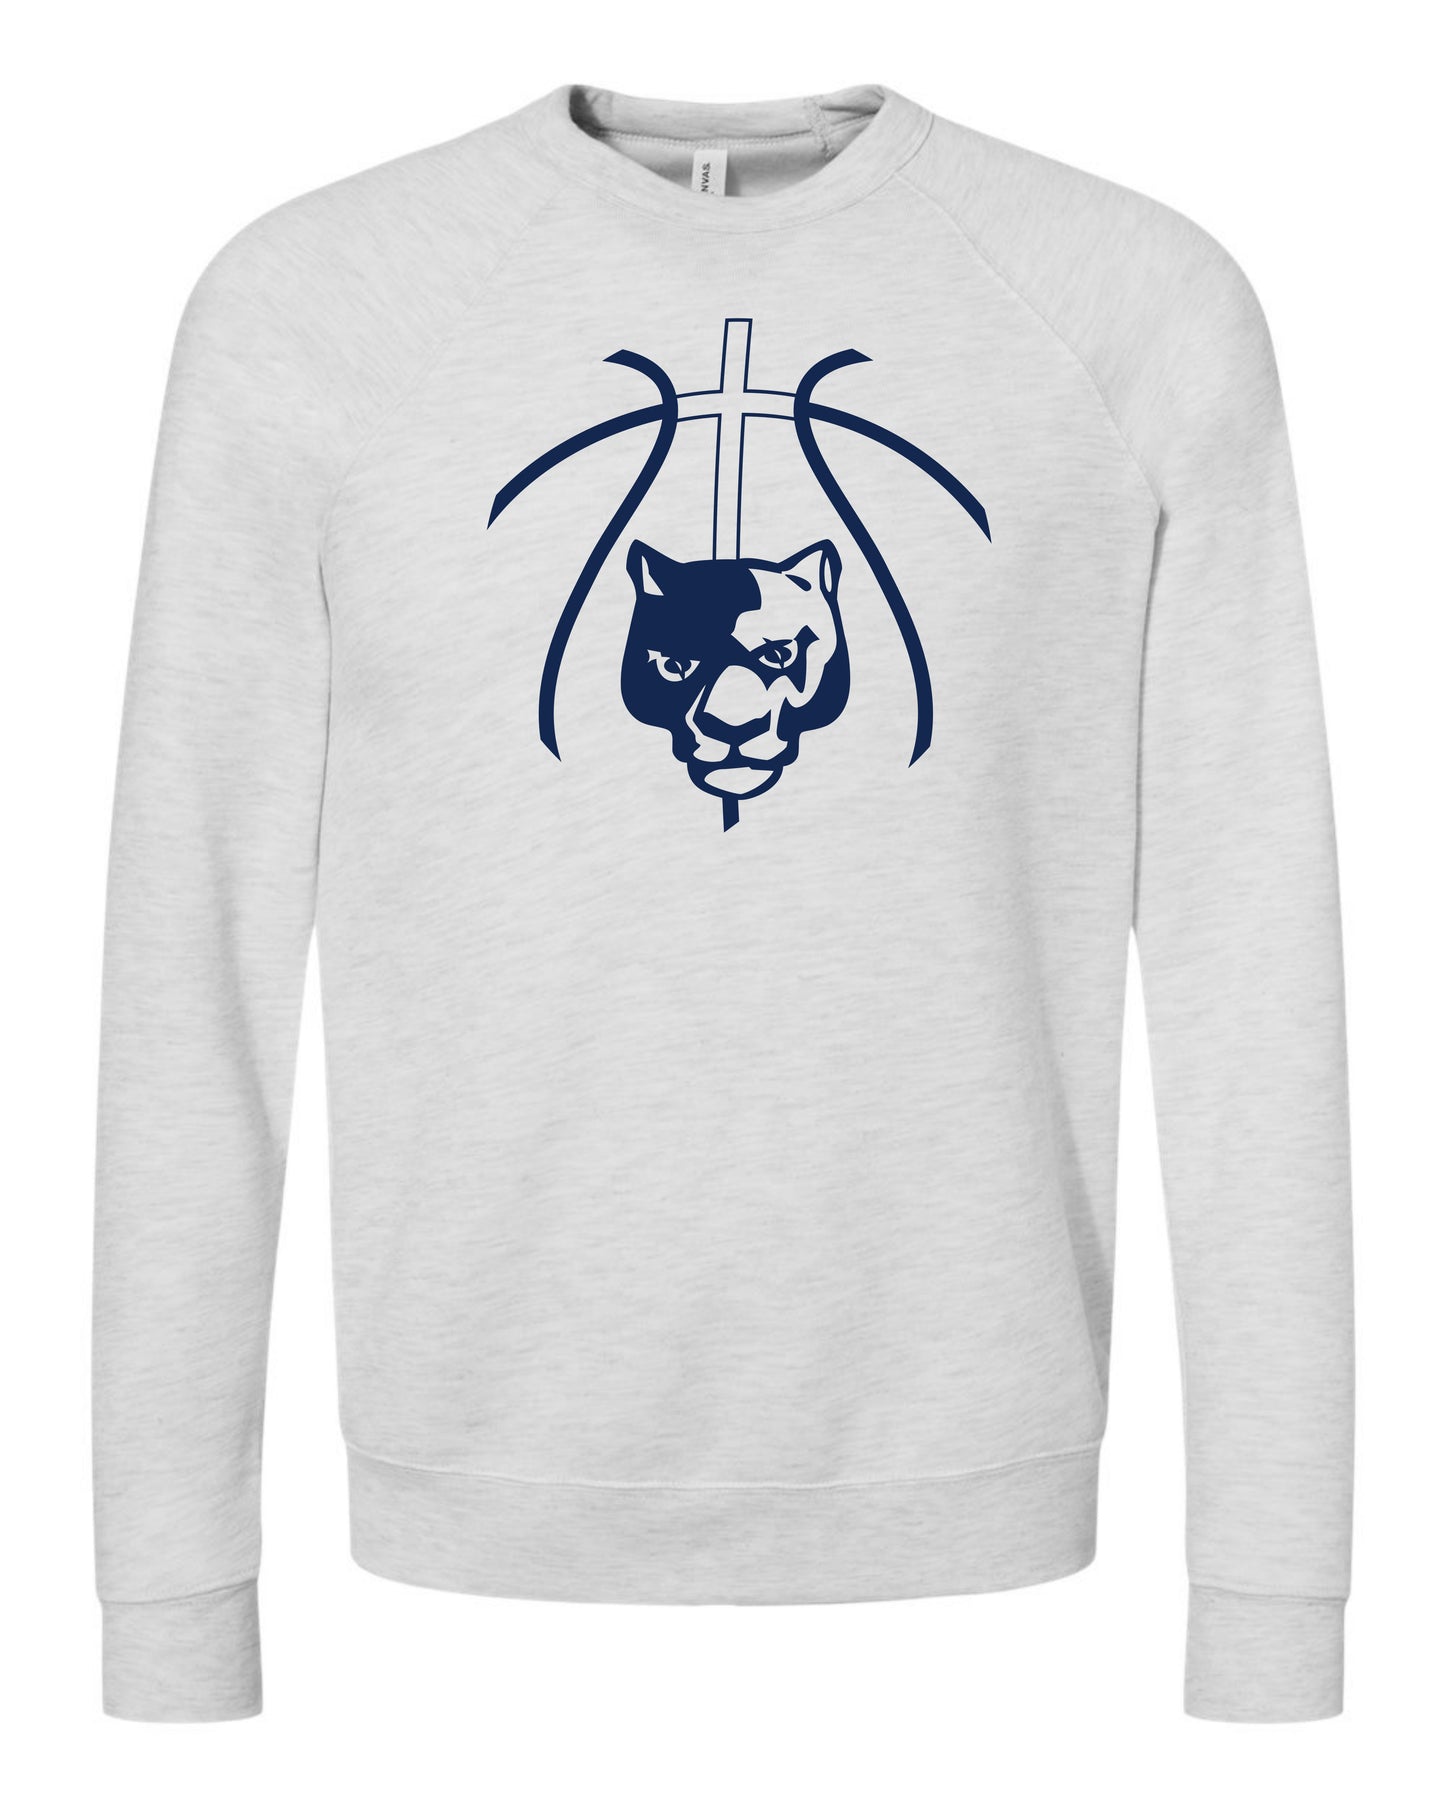 Panther Head Cross Ball - Adult Sweatshirt